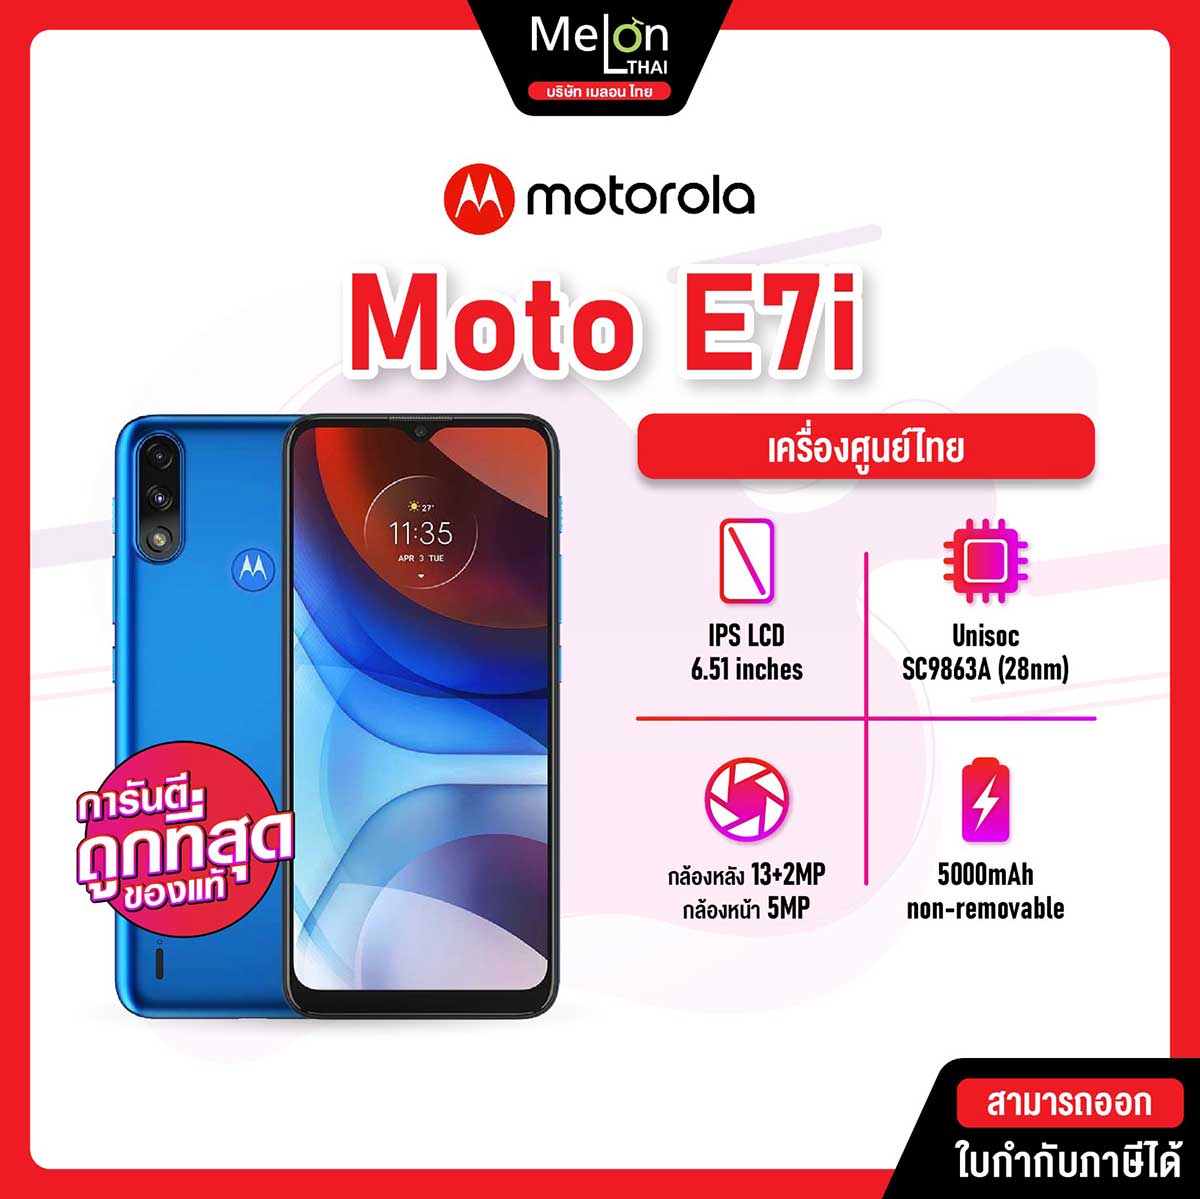 Motorola Moto e7i Power Ram2/32GB สี Blue ออกใบกำกับภาษีได้ โมโต Melon 